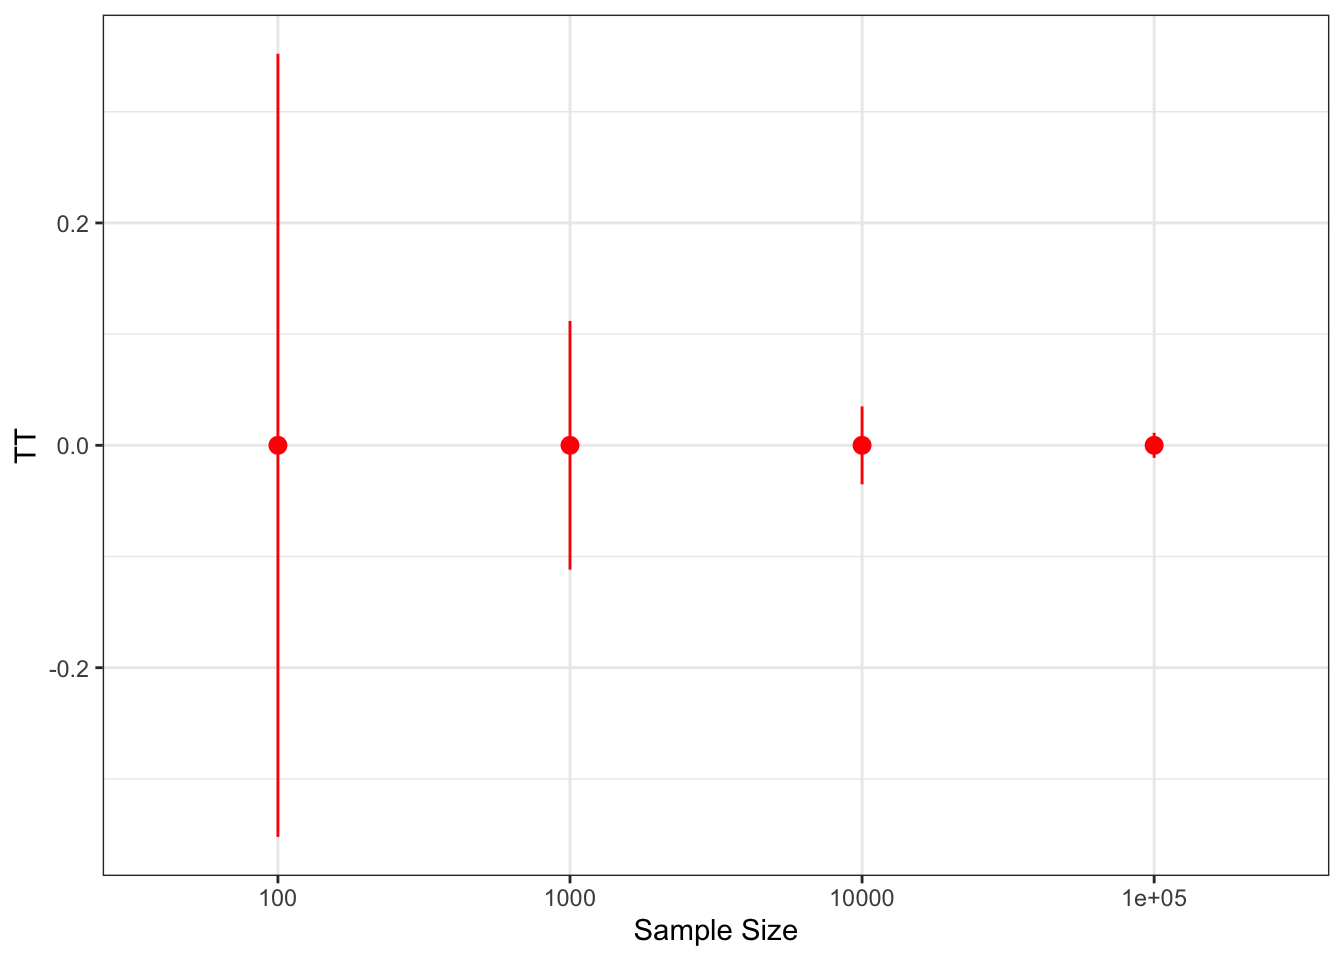 Sampling noise of the Brute Force estimator using randomization inference